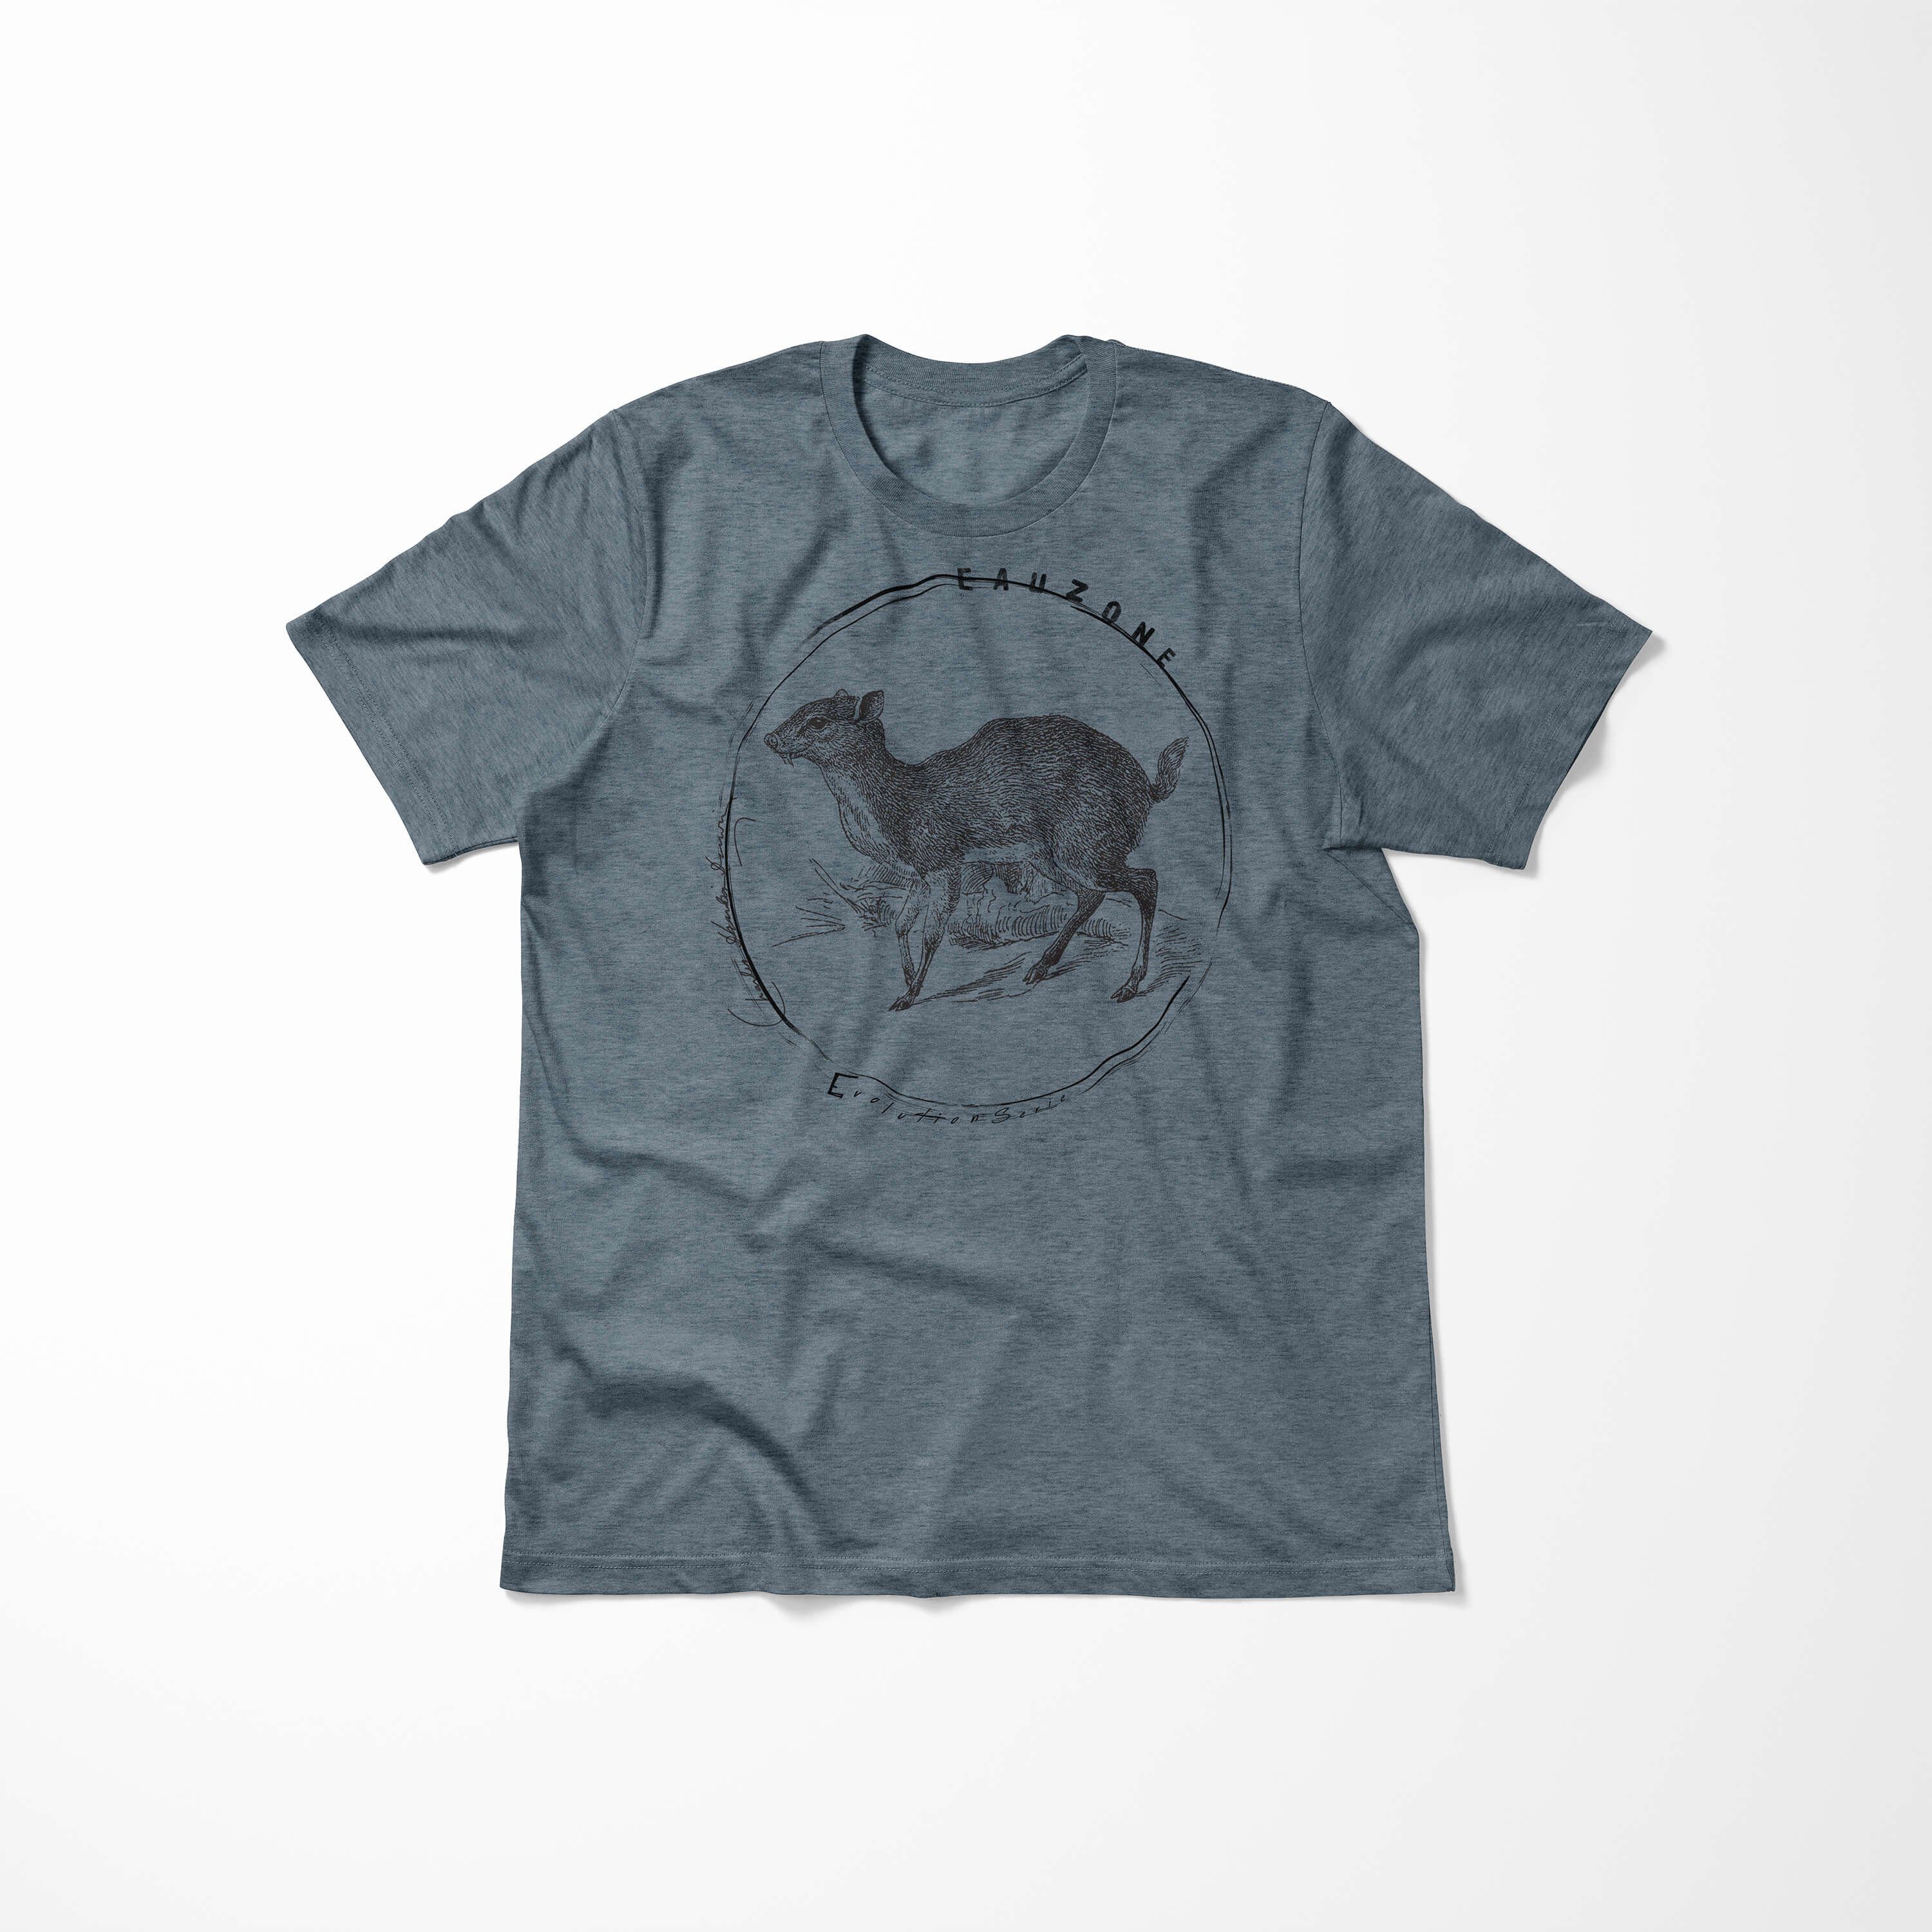 T-Shirt Indigo Herren Chevrotain Evolution T-Shirt Sinus Art